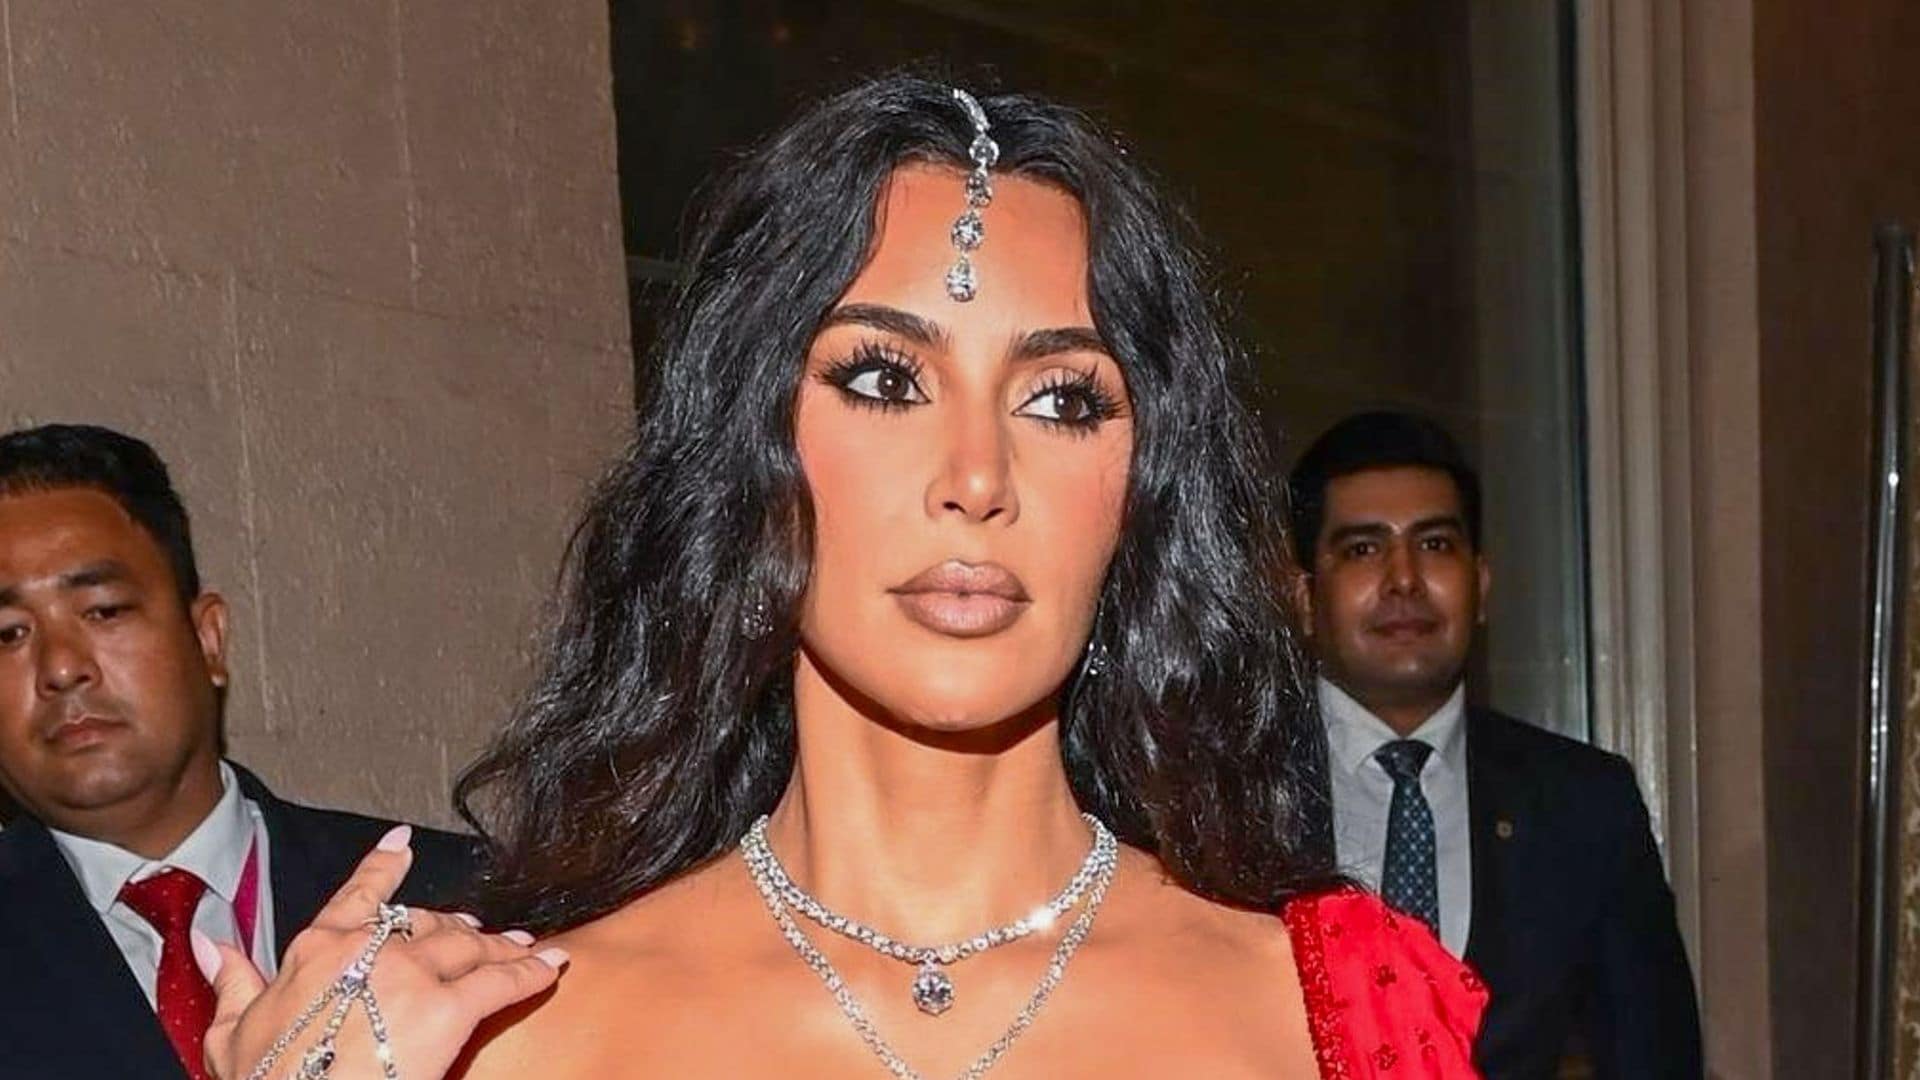 Kim Kardashian's red looks for the Ambani wedding sparks criticism